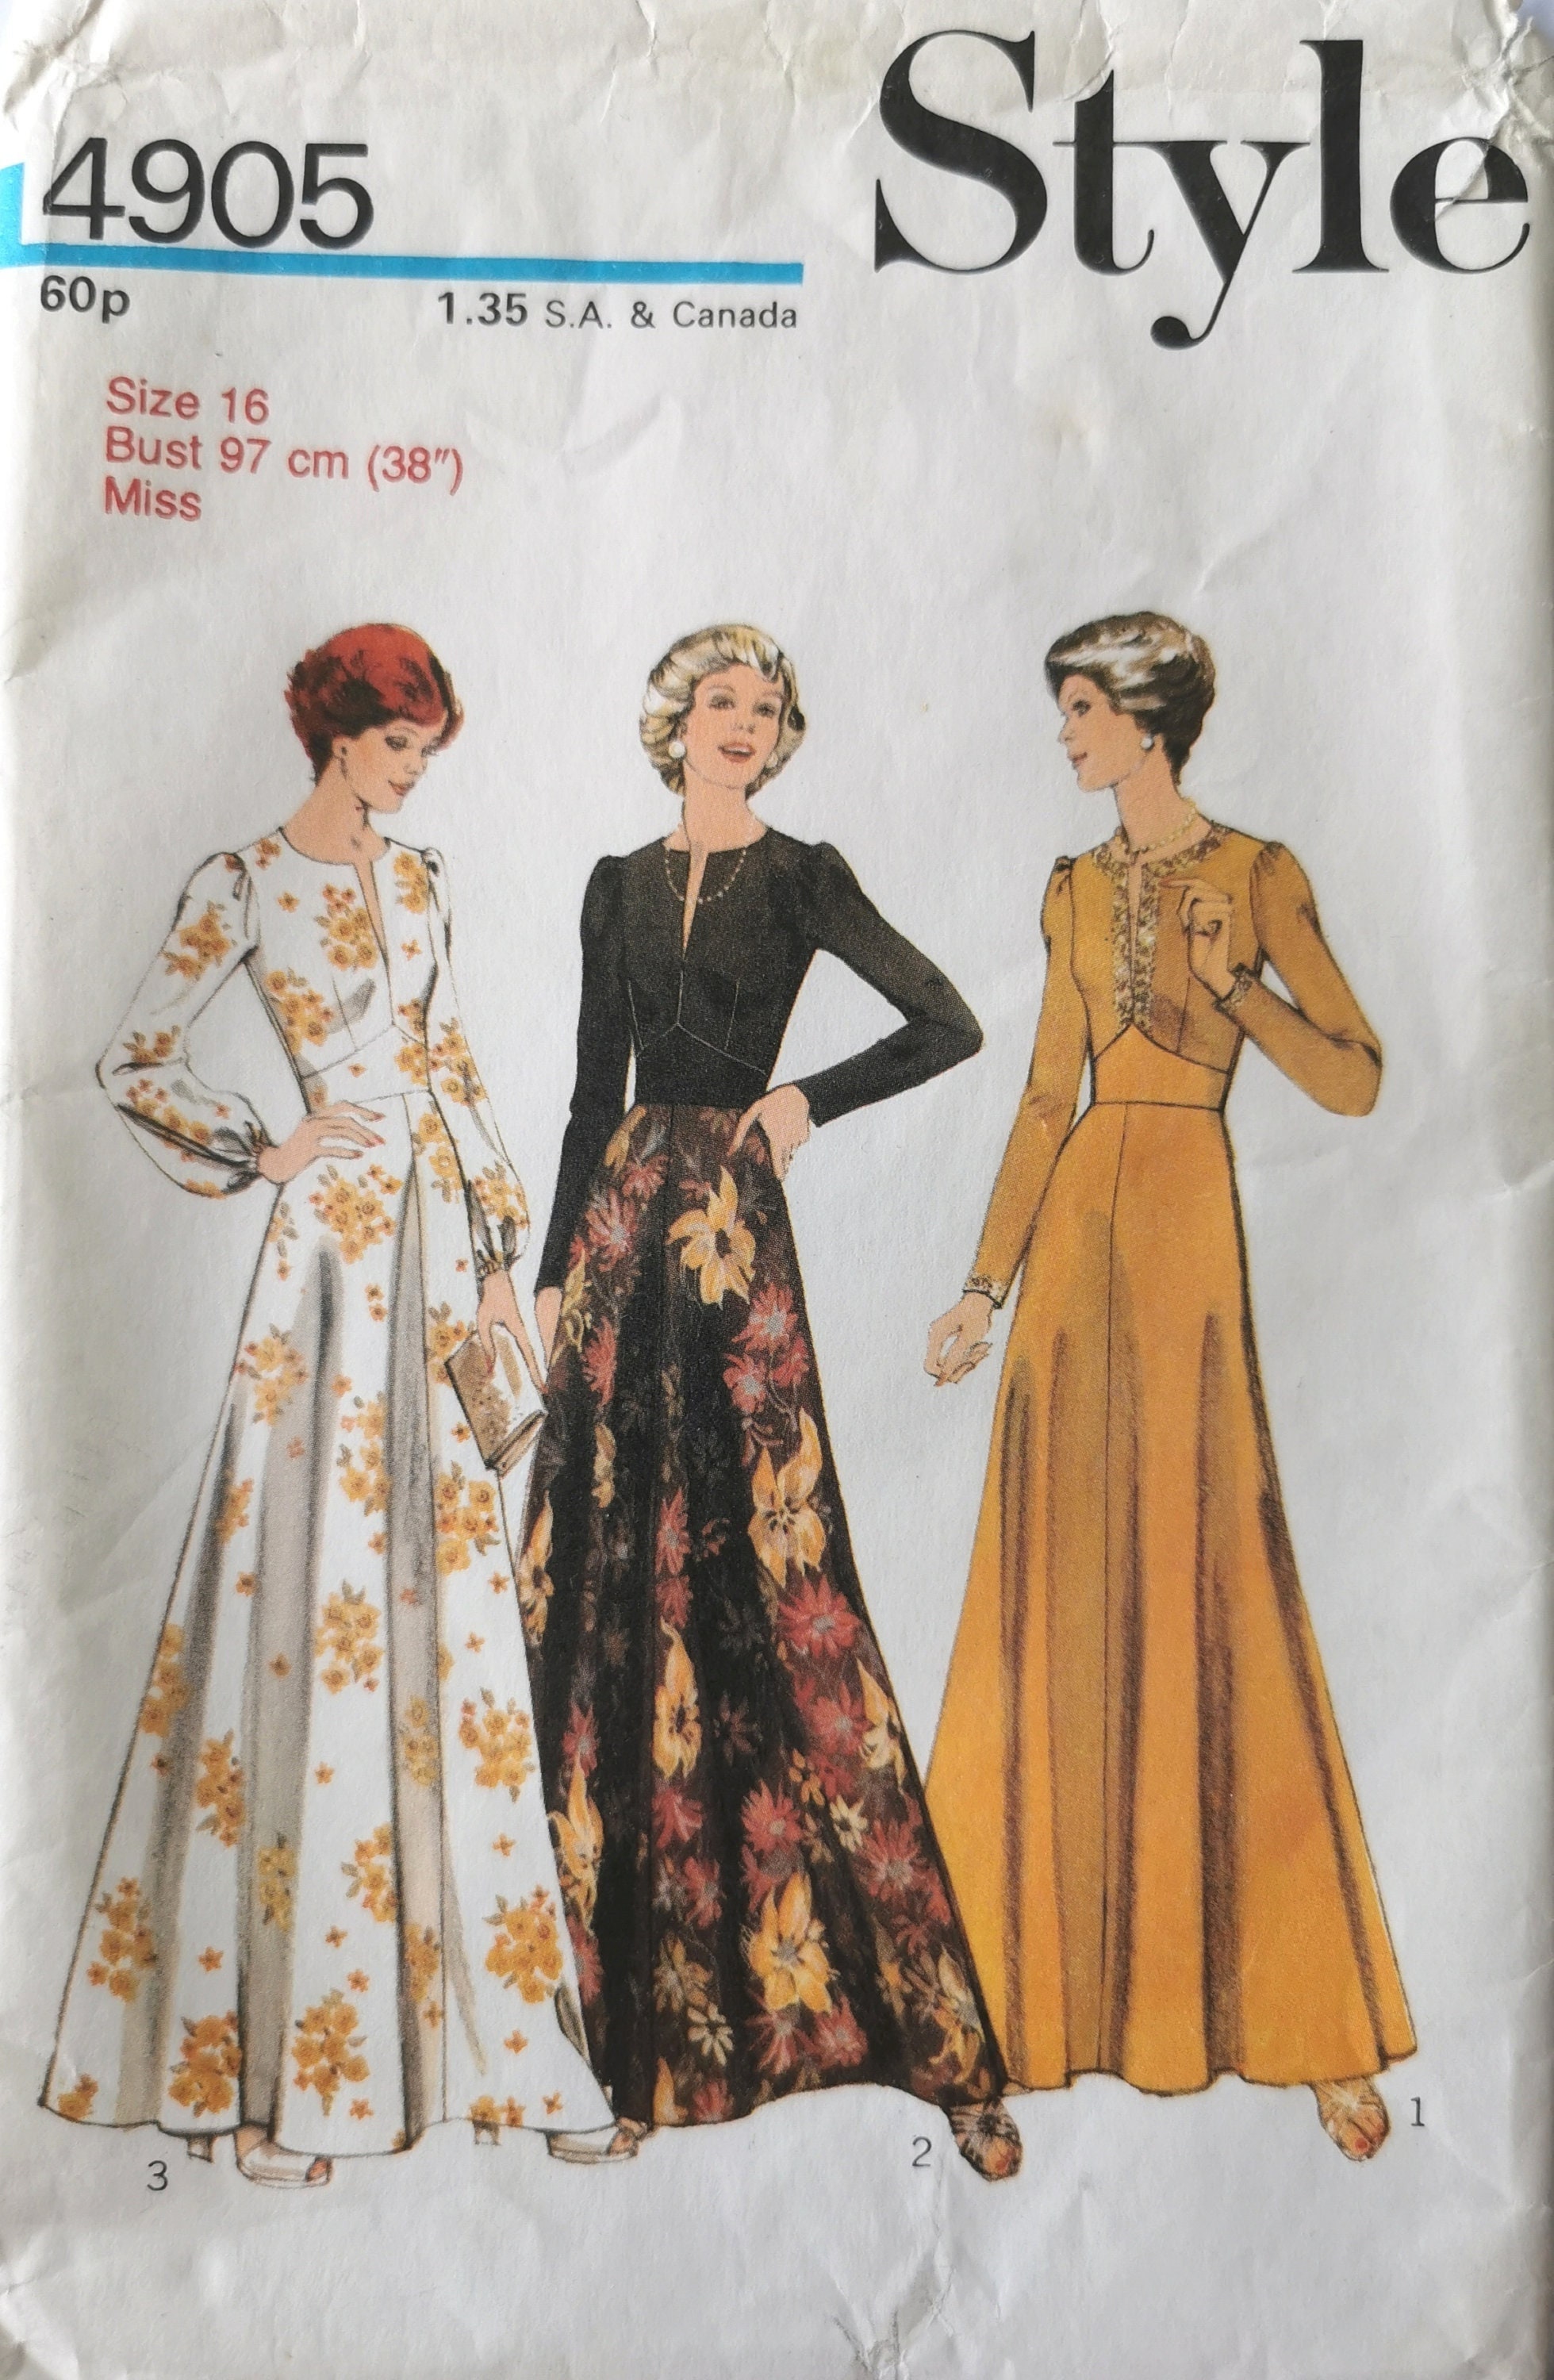 Revival Focus On 1970s Vintage Dresses – RevivalVintage